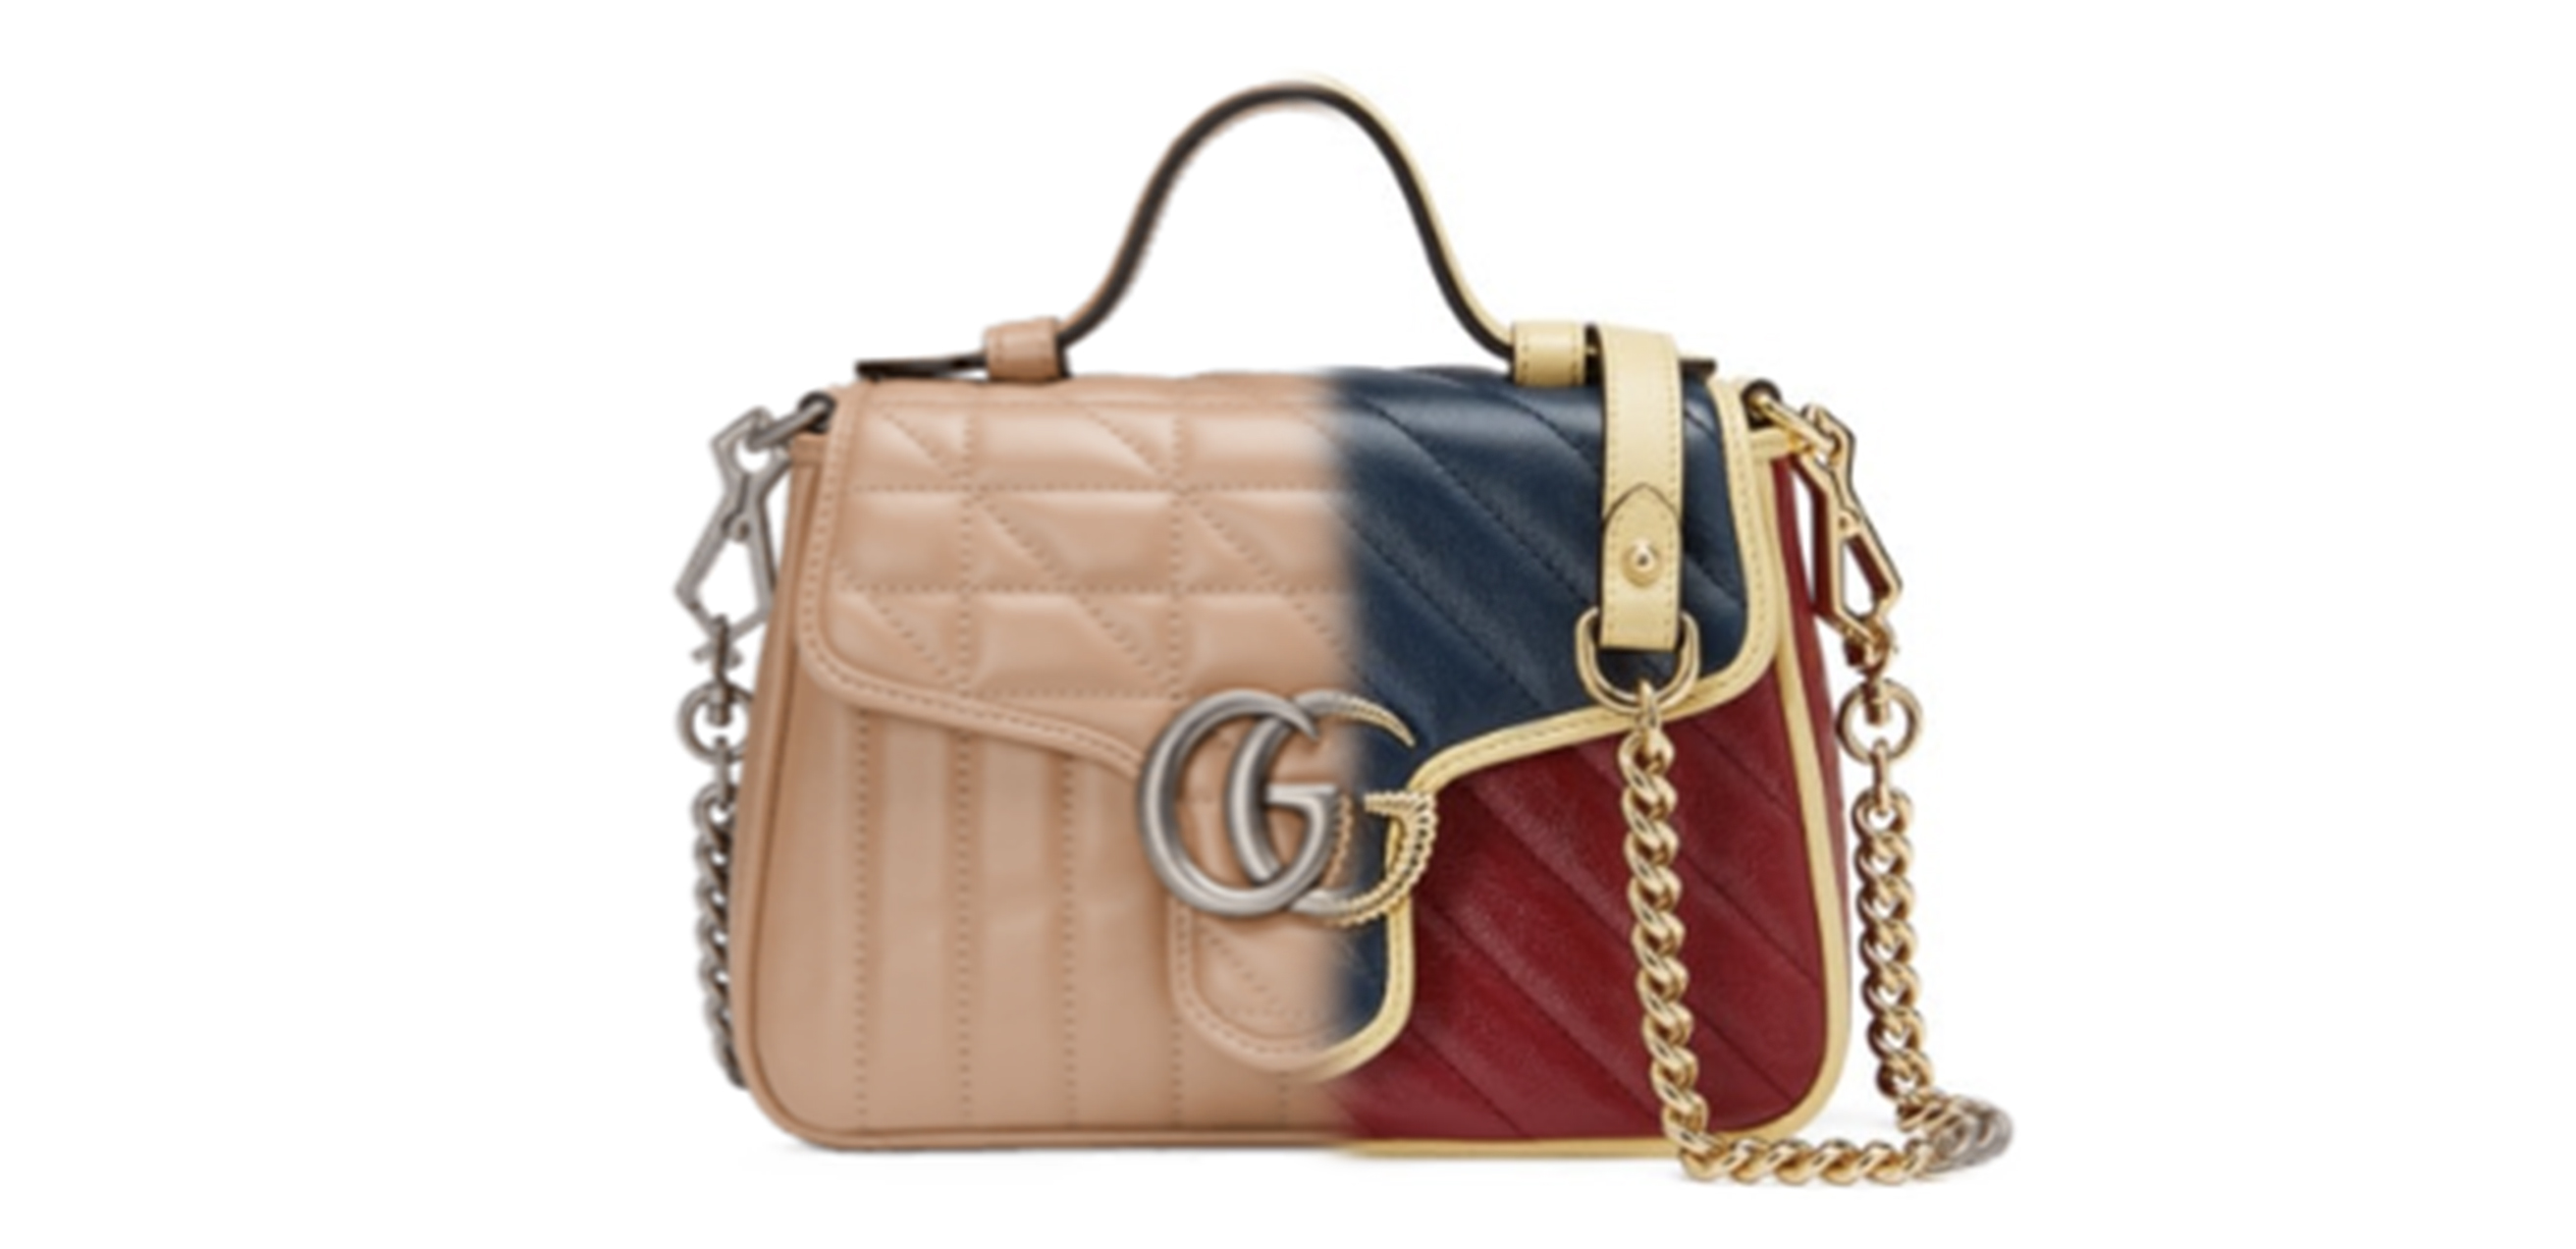 Kerry Katona shows off £1,340 Gucci handbag - but fans reckon it's a FAKE  after spotting telltale detail | The Sun